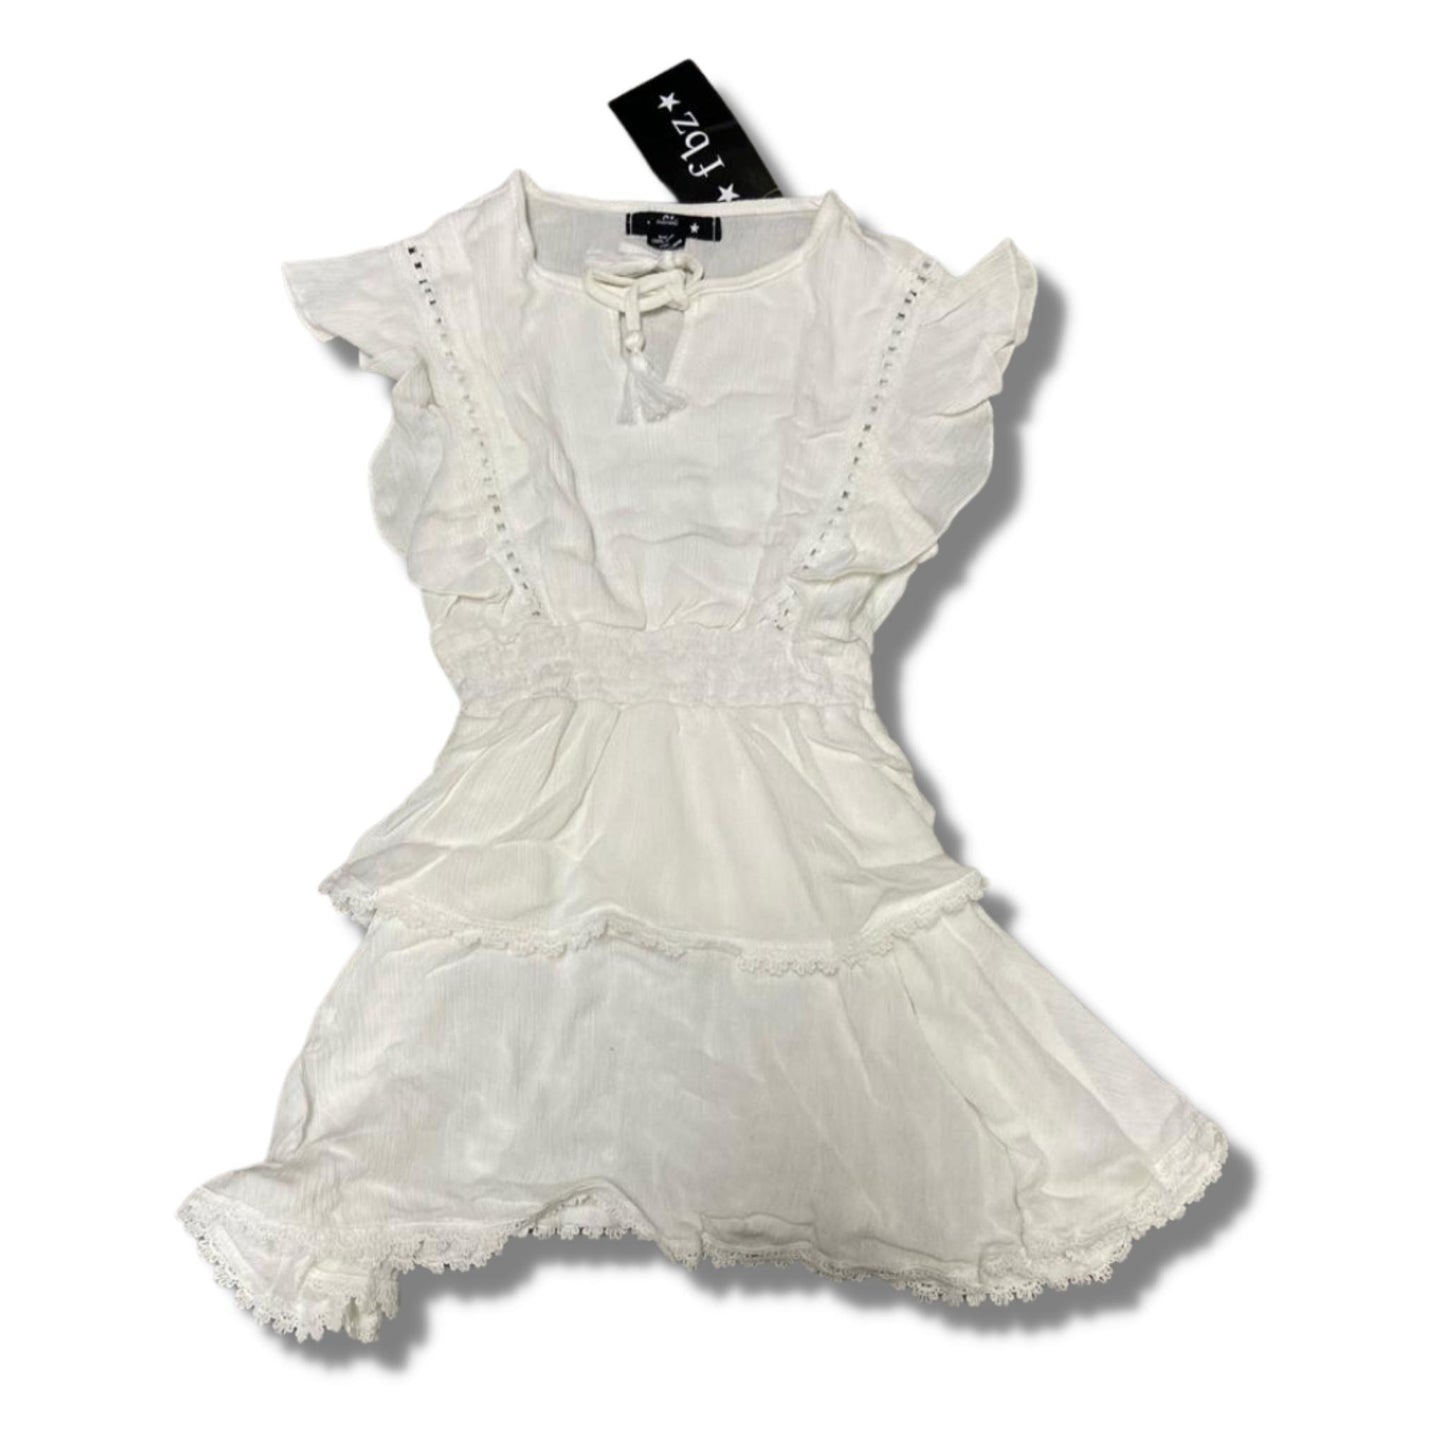 Flowers by Zoe Off White Dress - a Spirit Animal - Dress $90-$105 dress Dresses